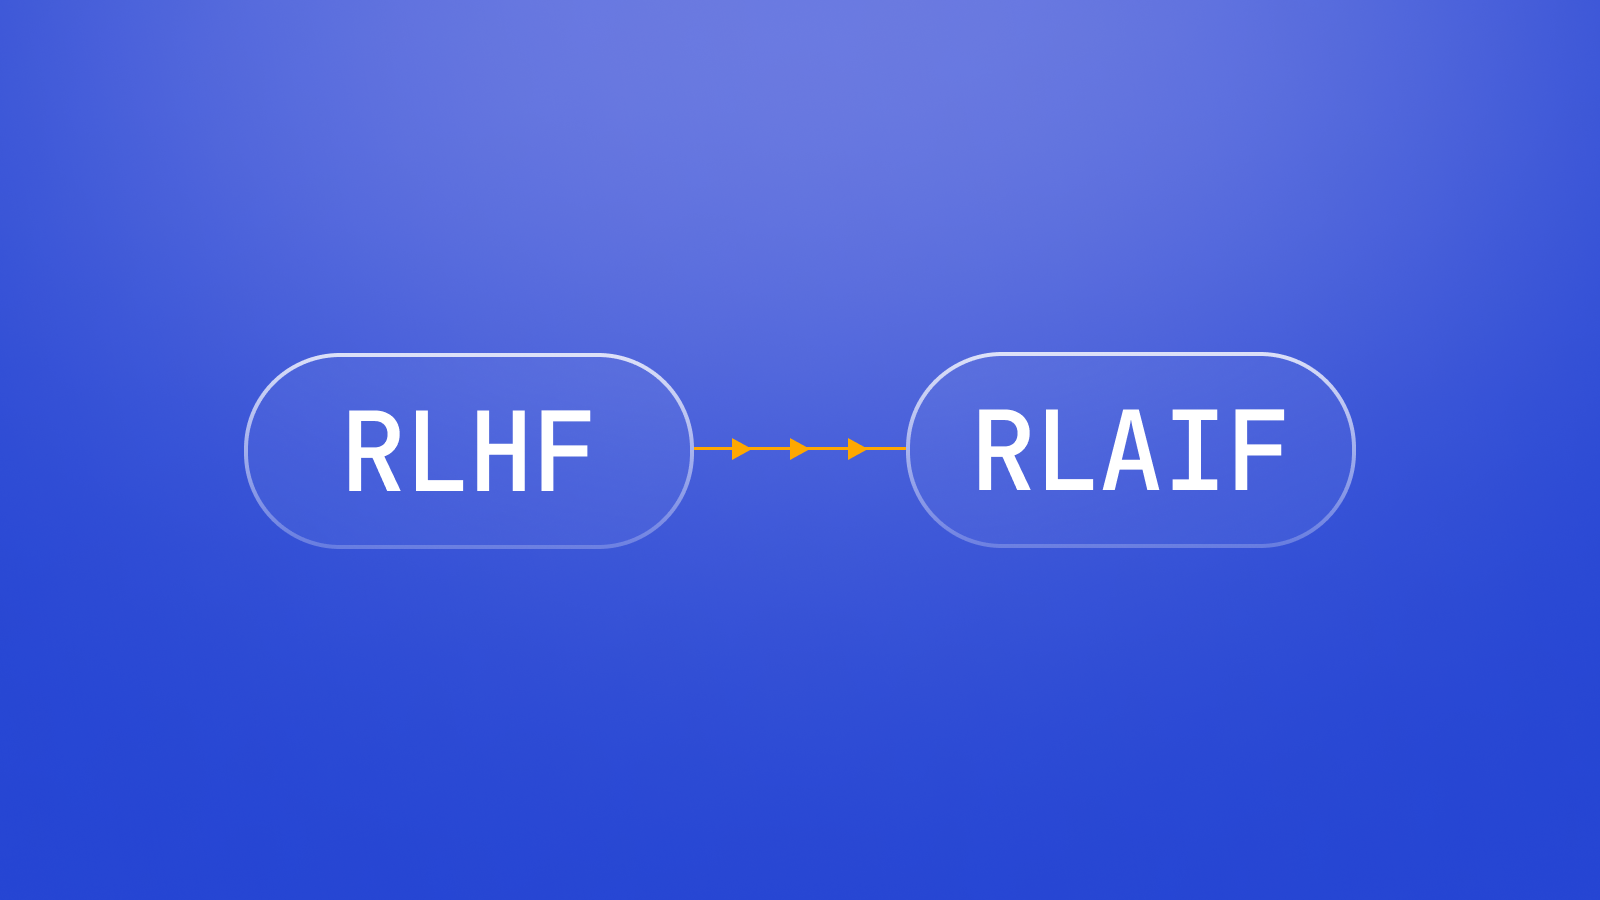 RLHF vs RLAIF for language model alignment